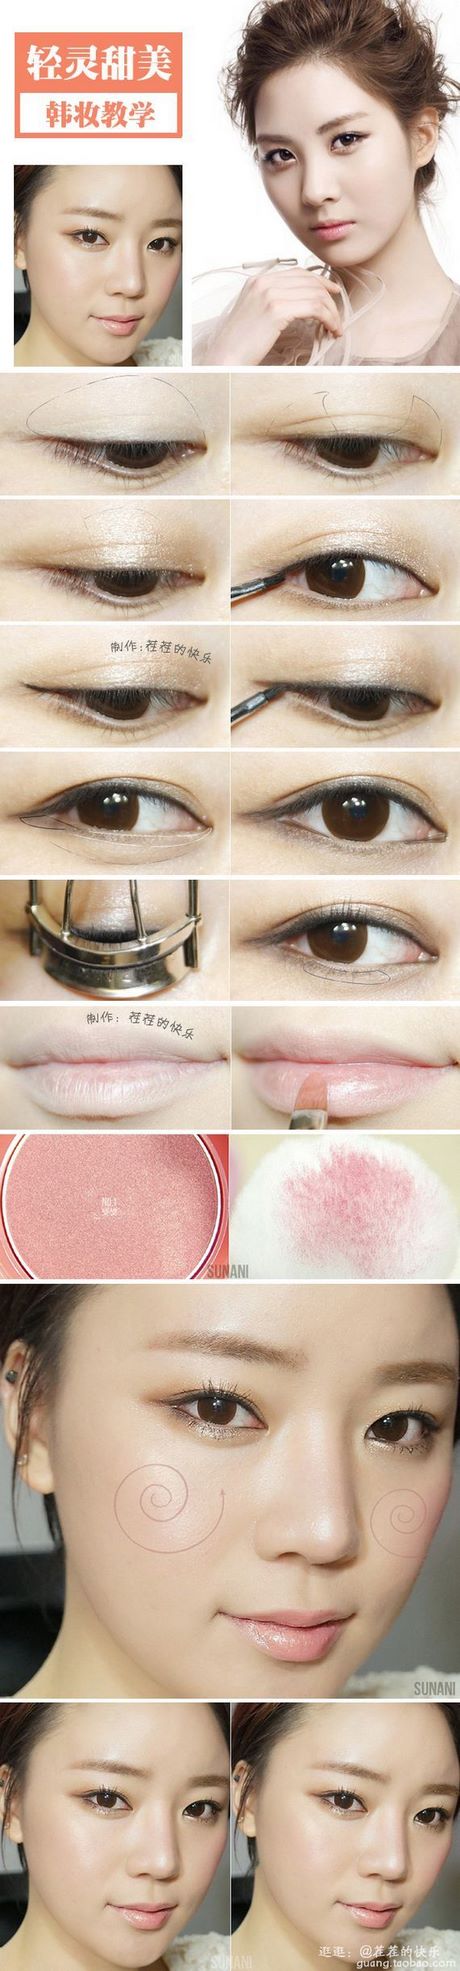 snsd-makeup-tutorial-95_3 Snsd make-up tutorial